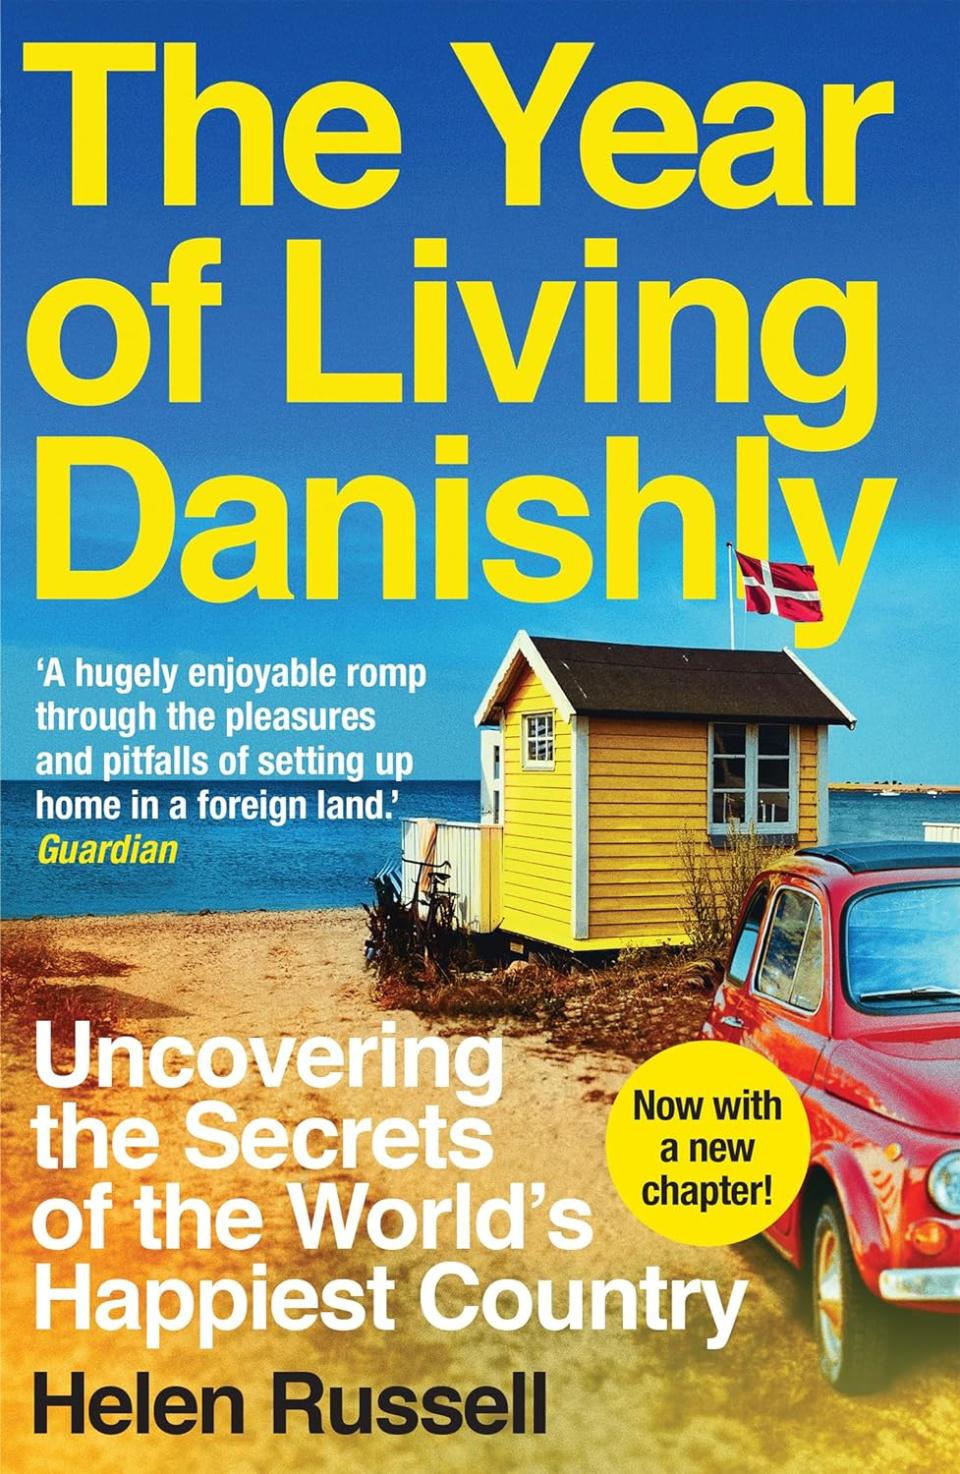 "The Year of Living Danishly"